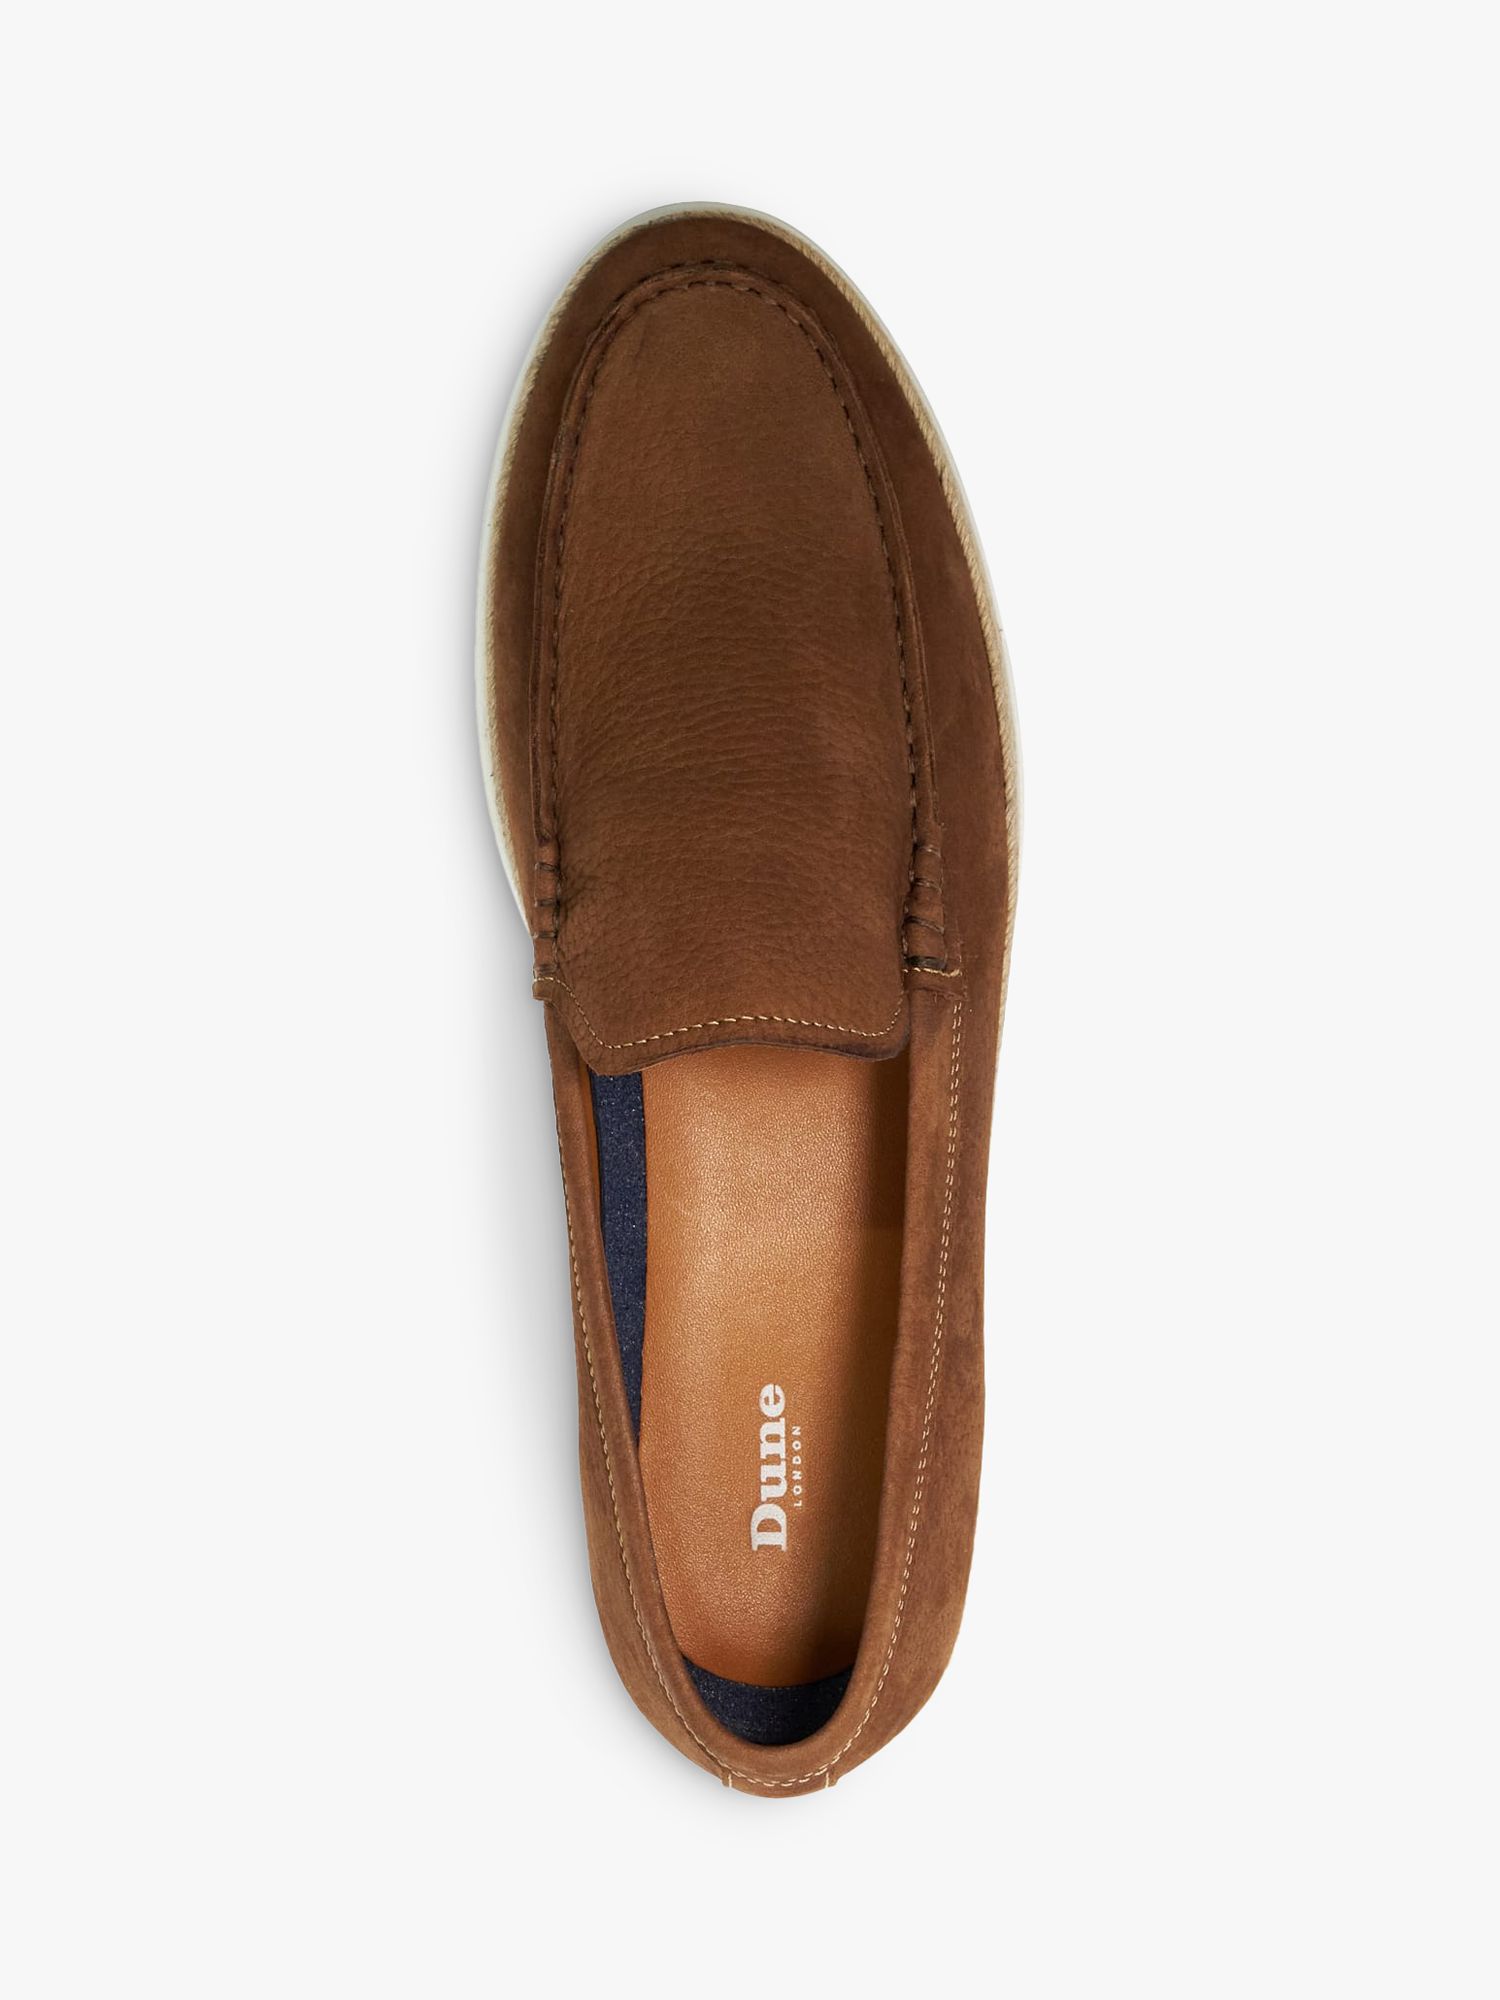 Dune Bountii Nubuck Espadrille Shoes, Brown, 6